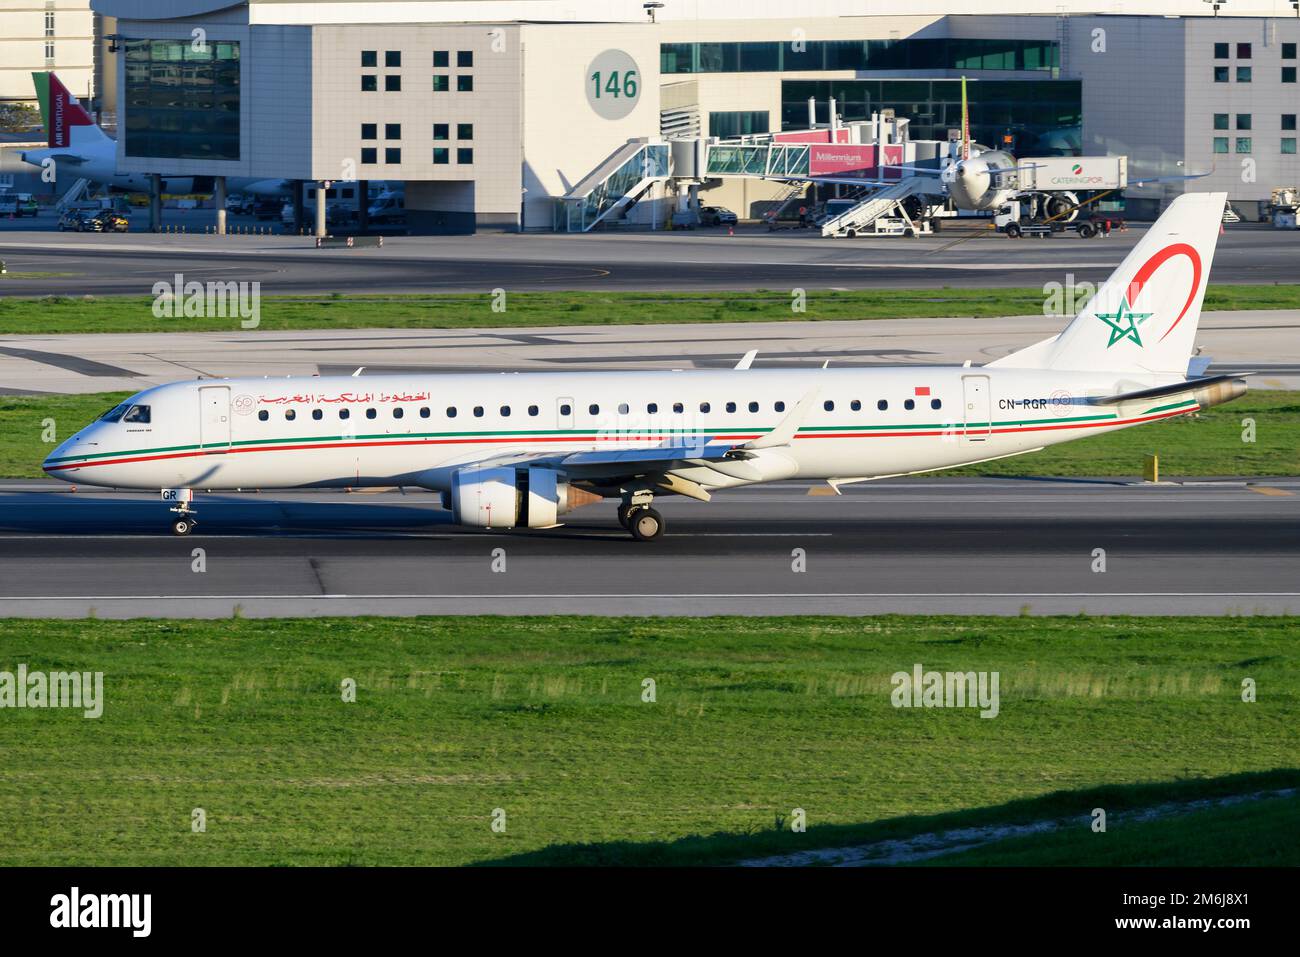 Royal Air Maroc Airline Embraer E190 Flugzeuglandung. Flugzeug der RAM Airline, auch bekannt als Royal Maroc. Stockfoto